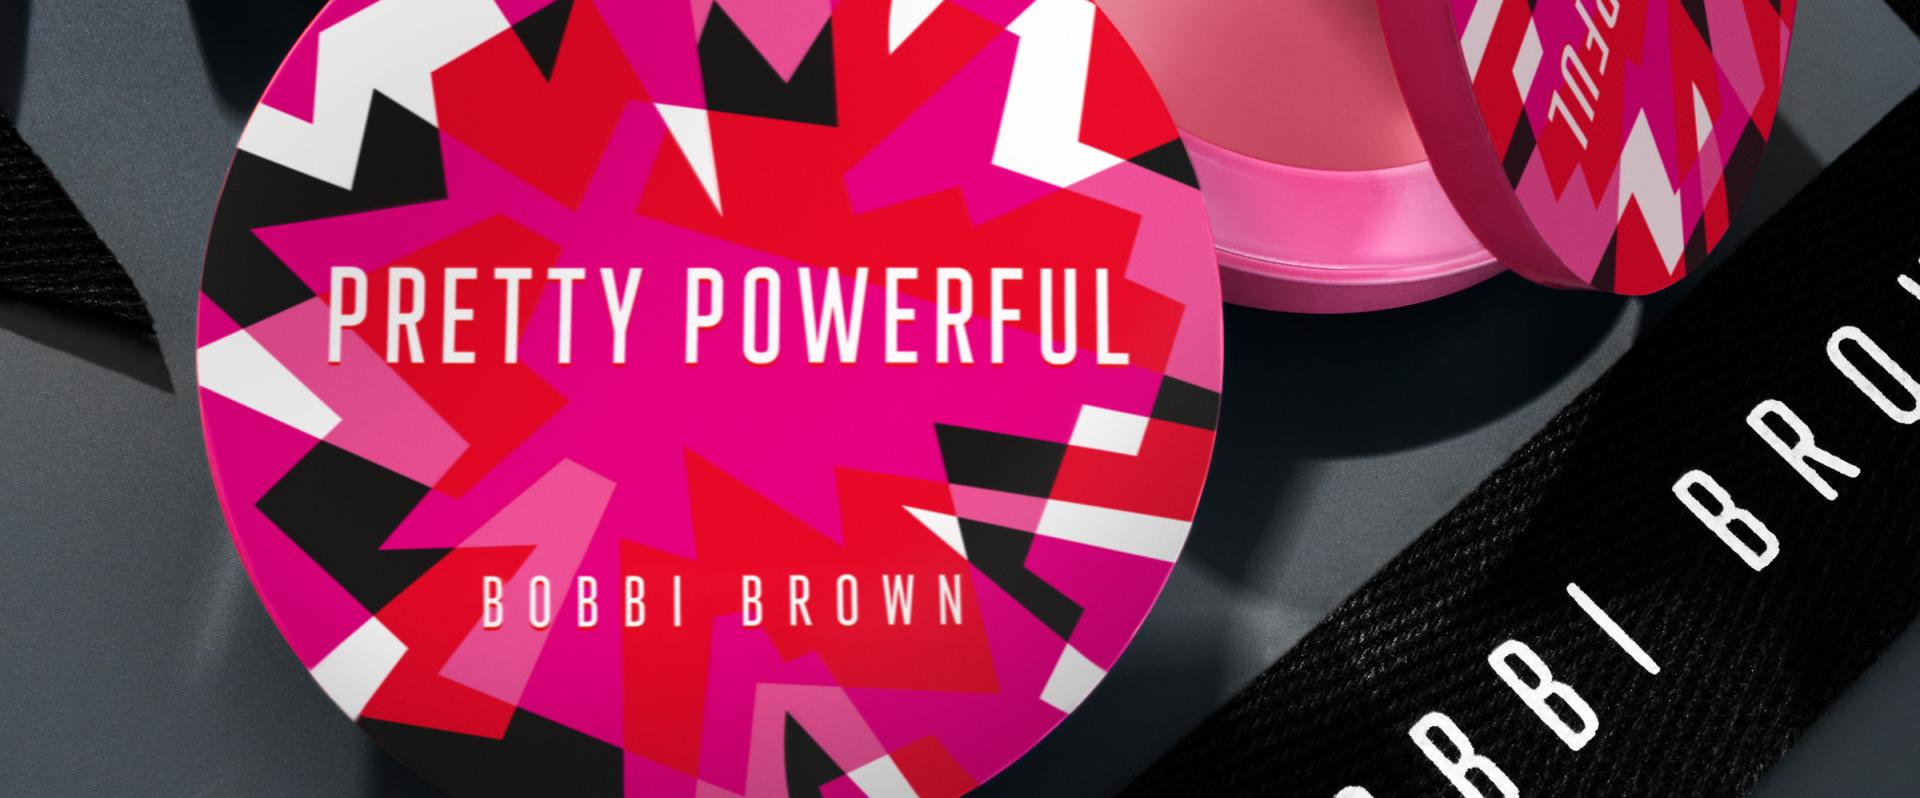 Bobby Brown Pretty Powerful Pot Rouge x Leta Sobierajski